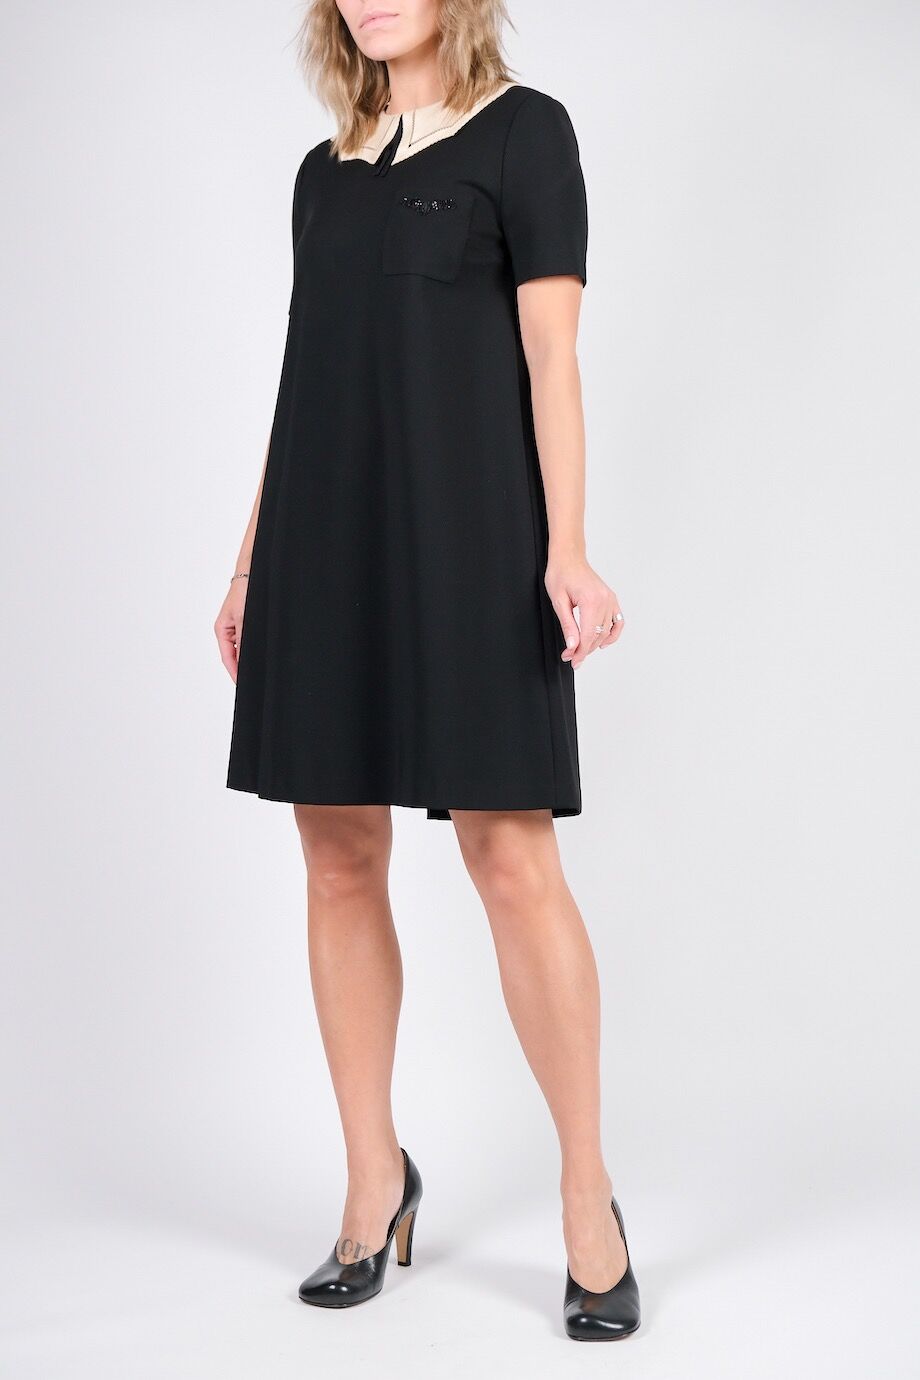 image 2 Платье чёрного цвета со светлым  воротничком